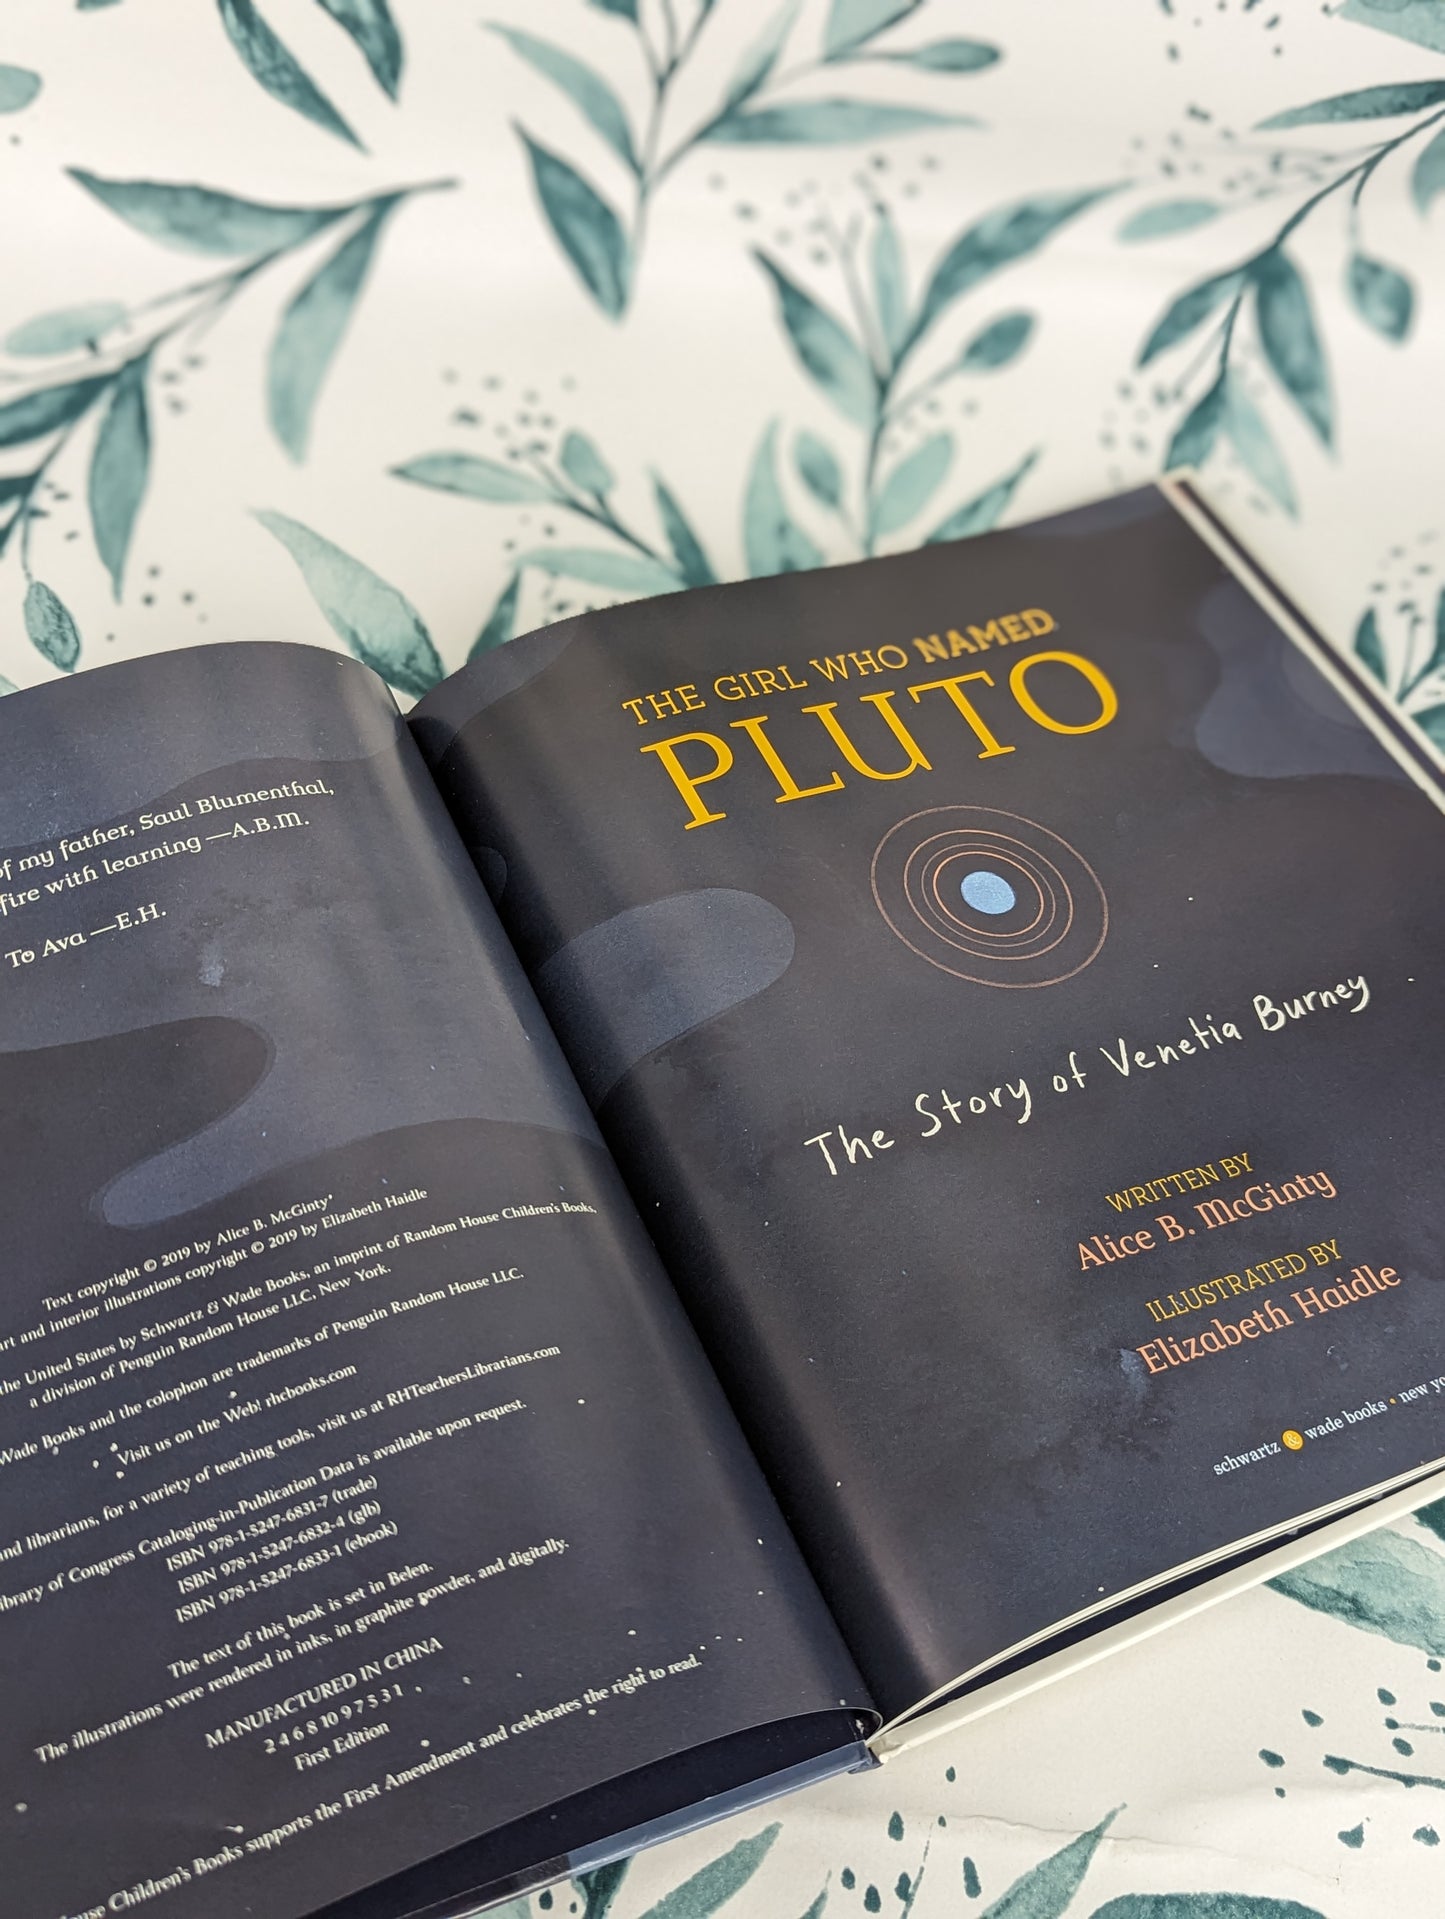 The Girl Who Named Pluto: The Story of Venetia Burney